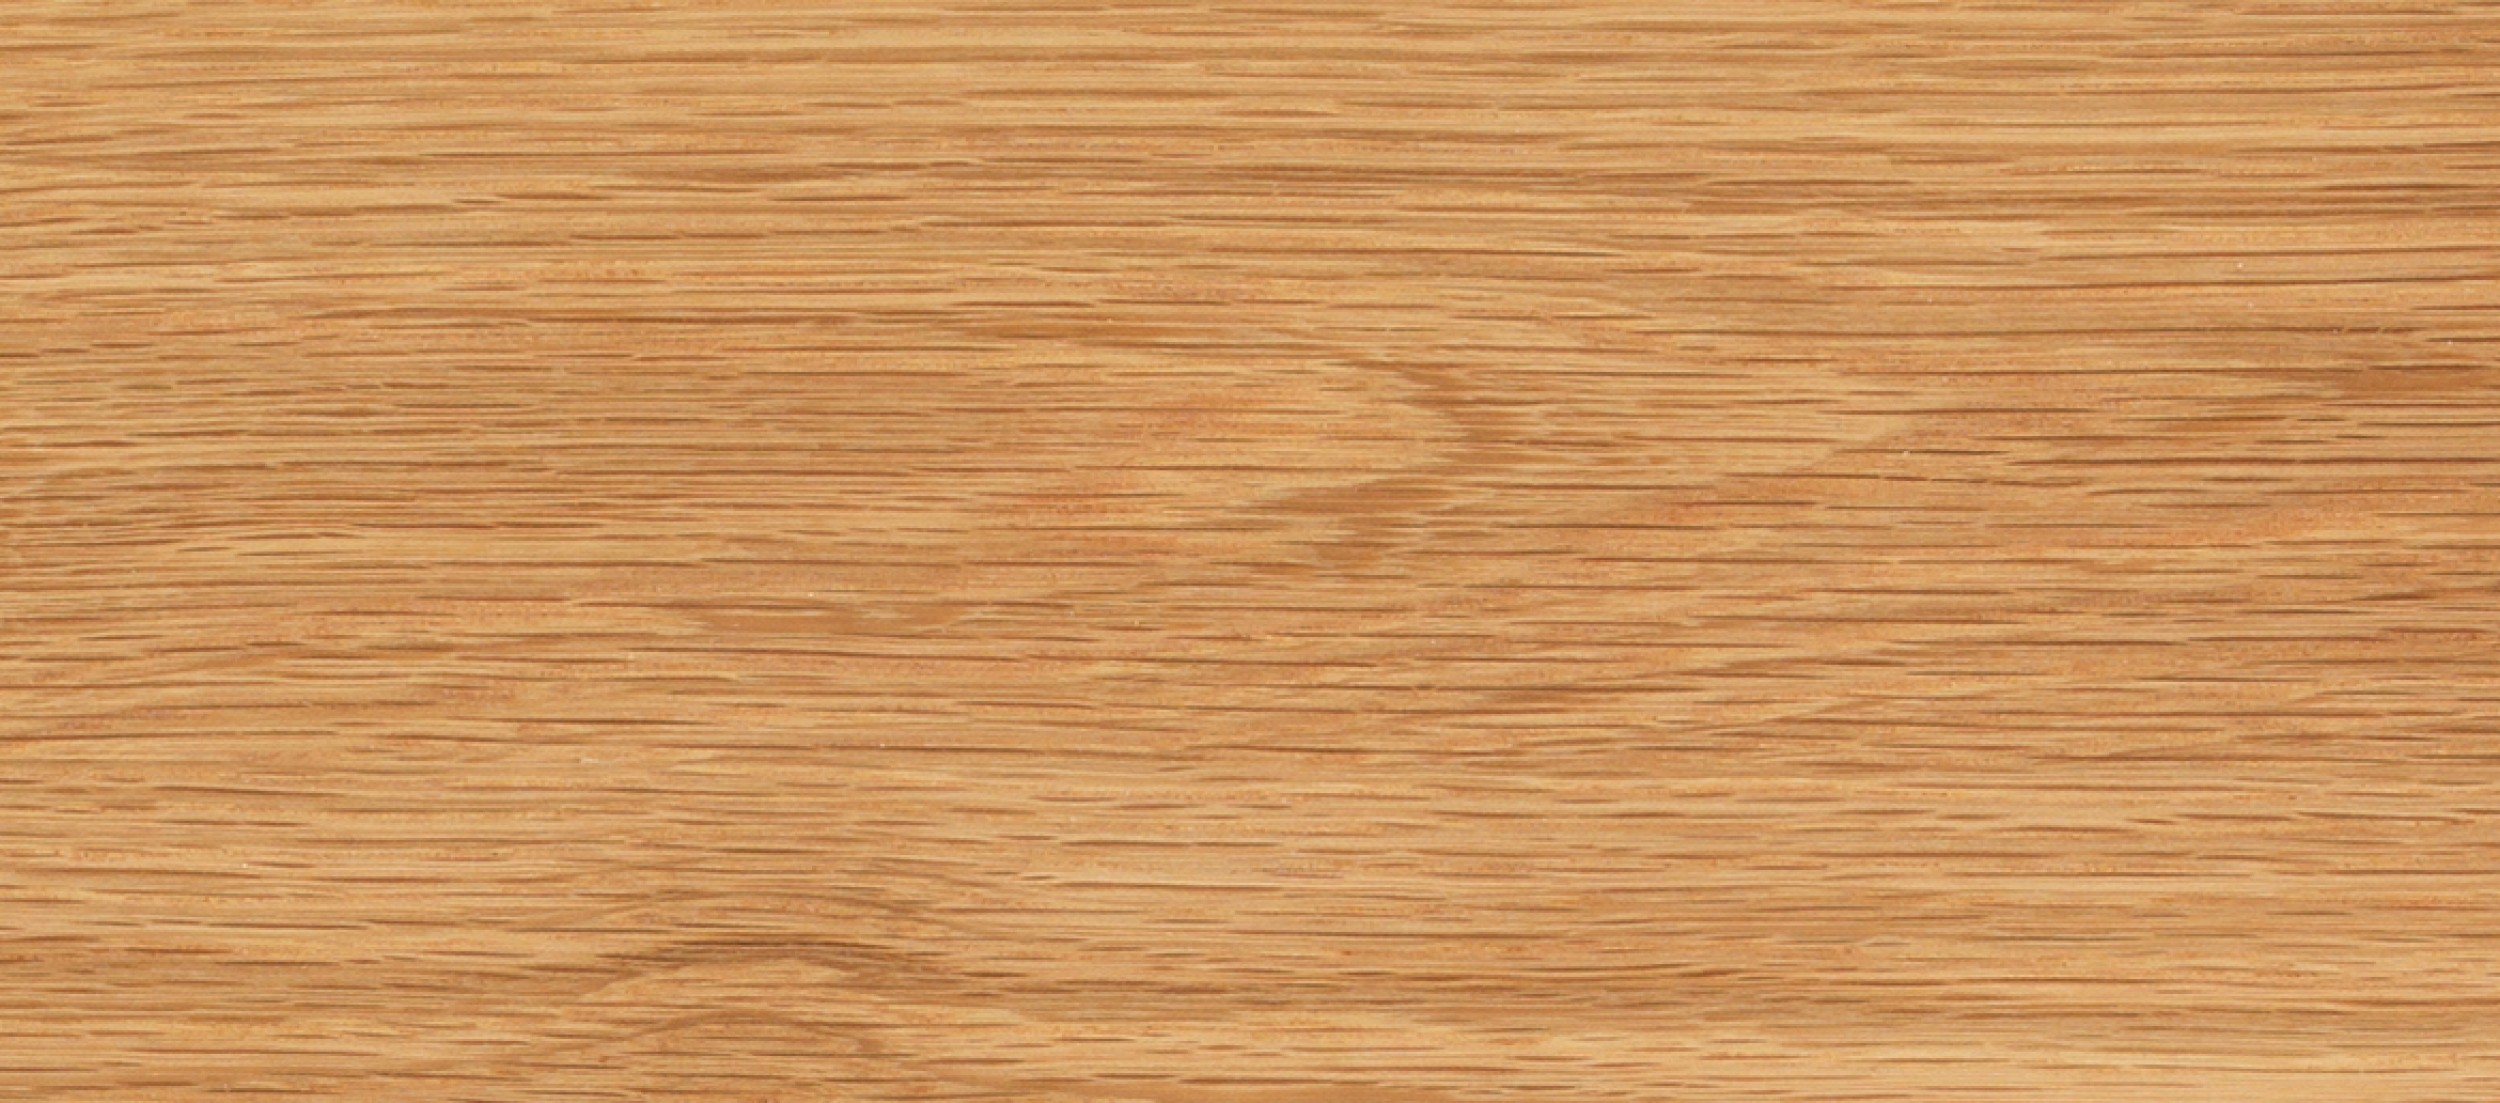 oak wood texture - Ideal.vistalist.co